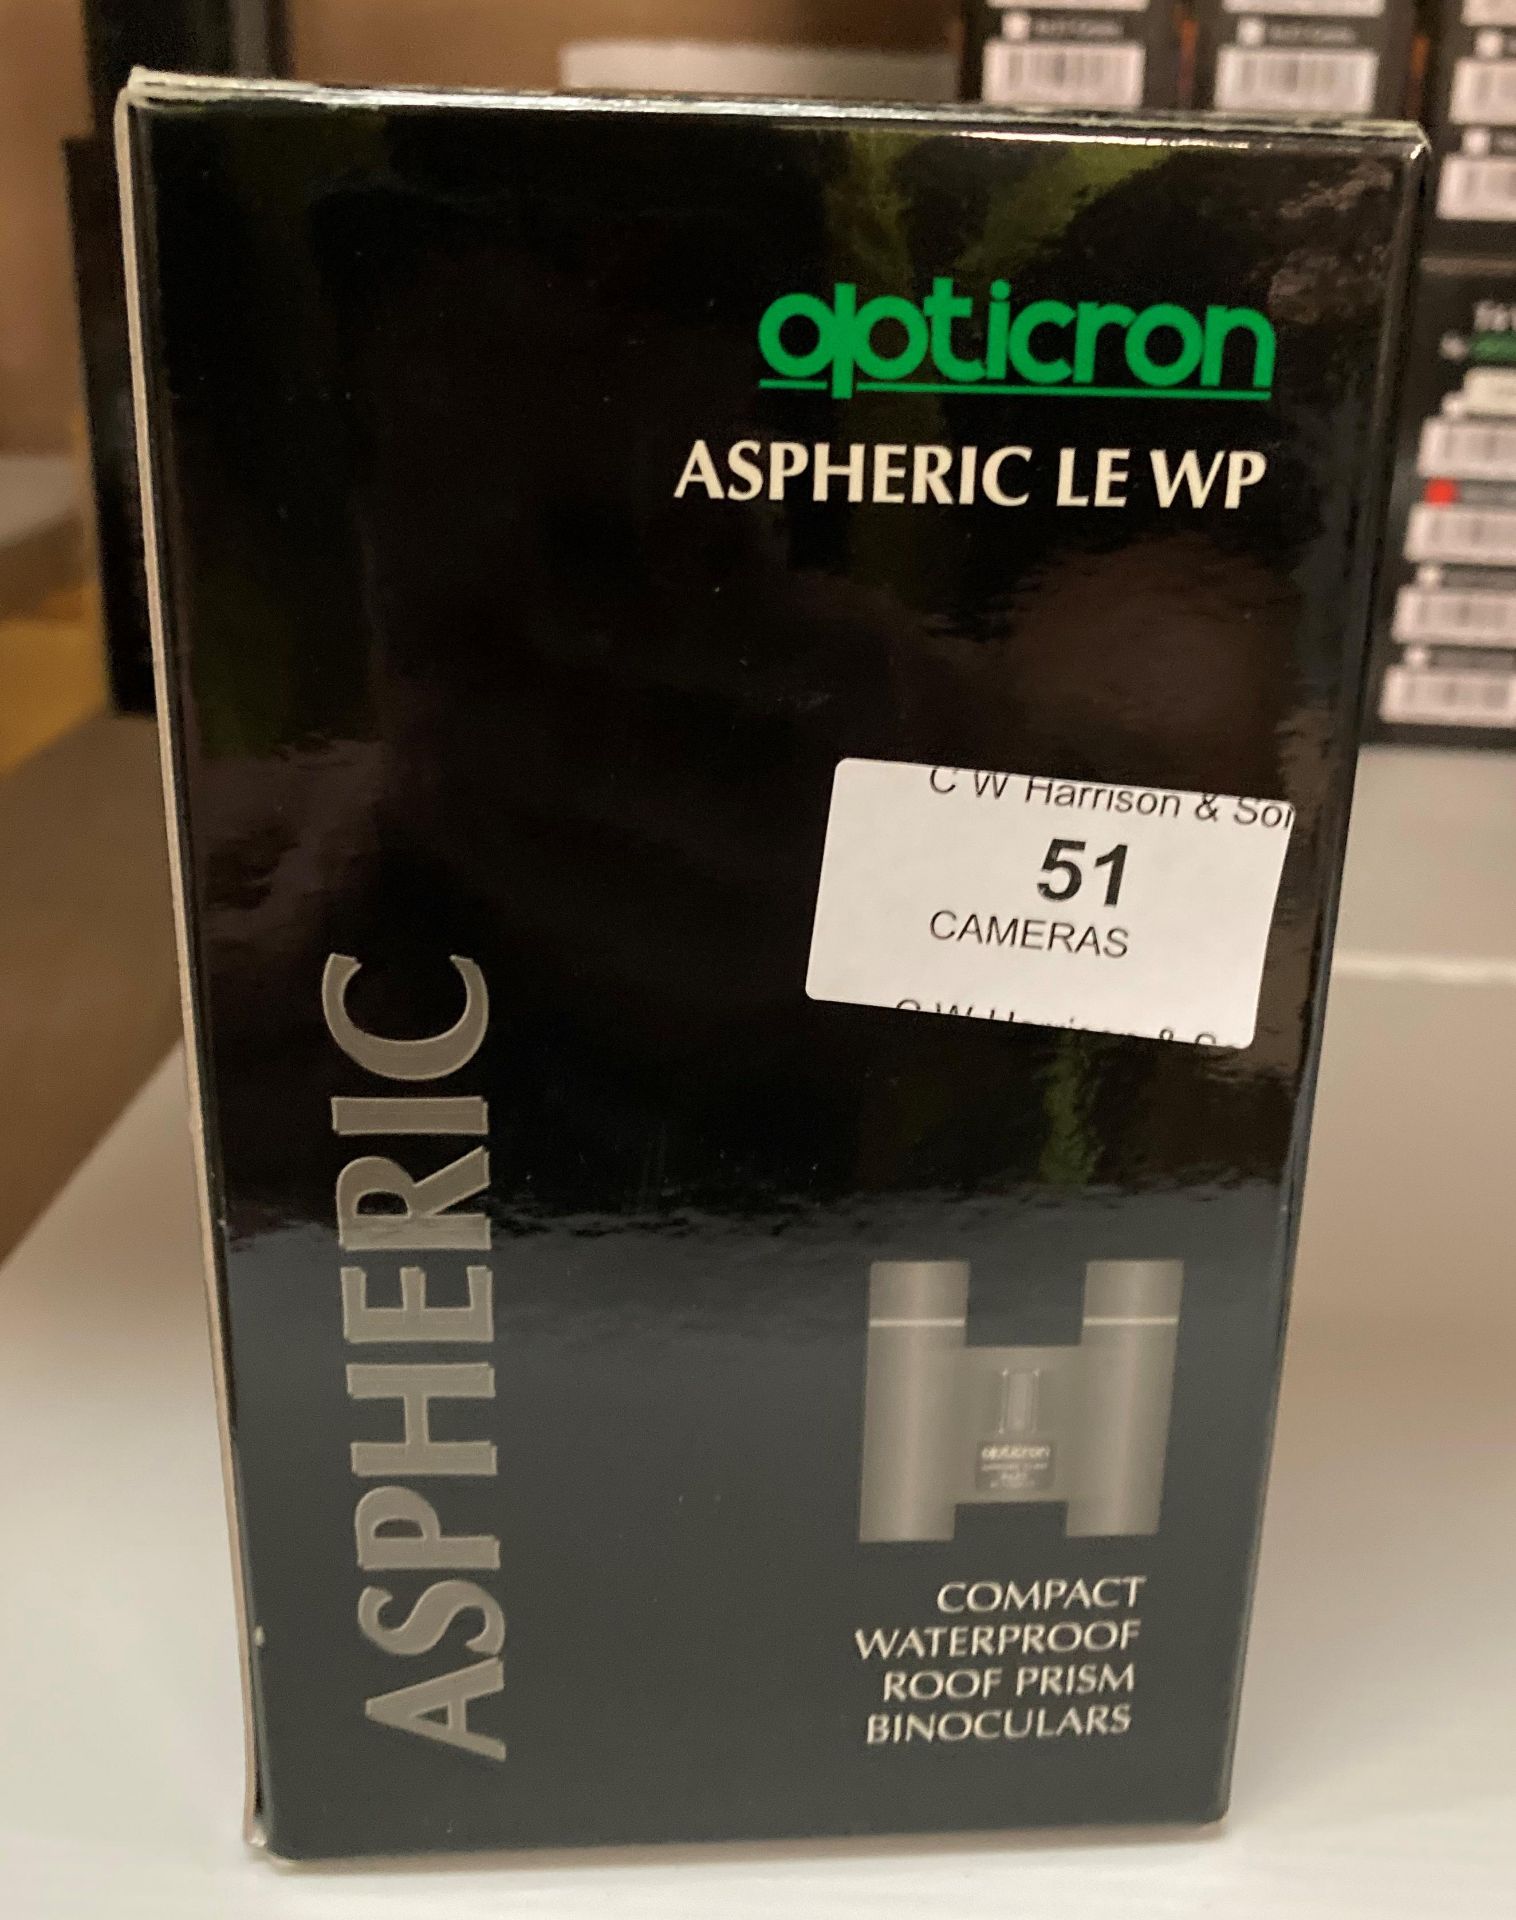 Opticron aspheric LEWP compact waterproof binoculars 10 x 25 (new boxed) (saleroom location: QL05)